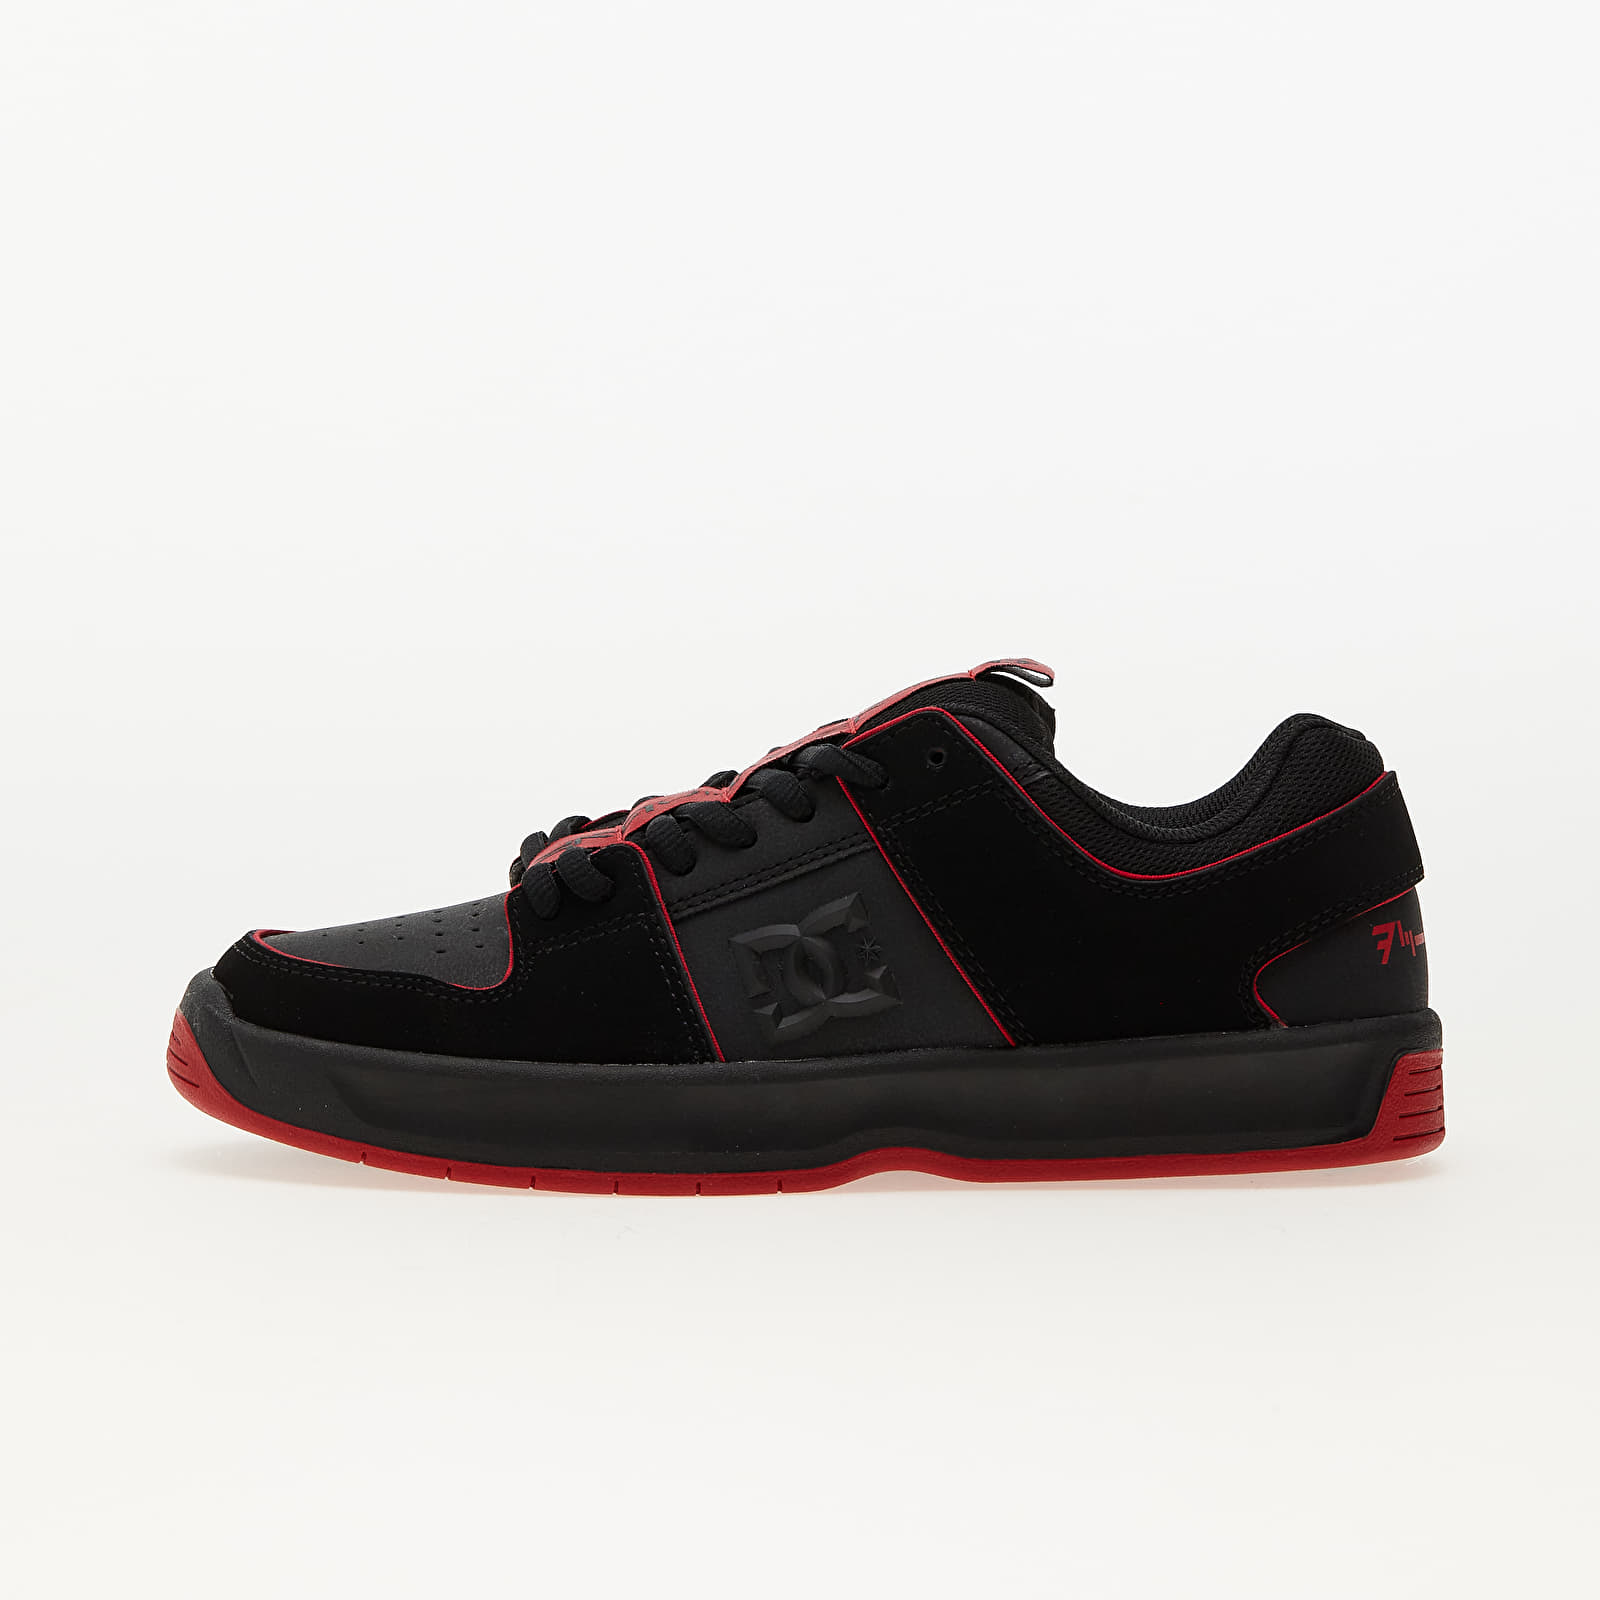 Baskets et chaussures pour hommes DC x Star Wars Lynx Zero Black/ Black/ Red